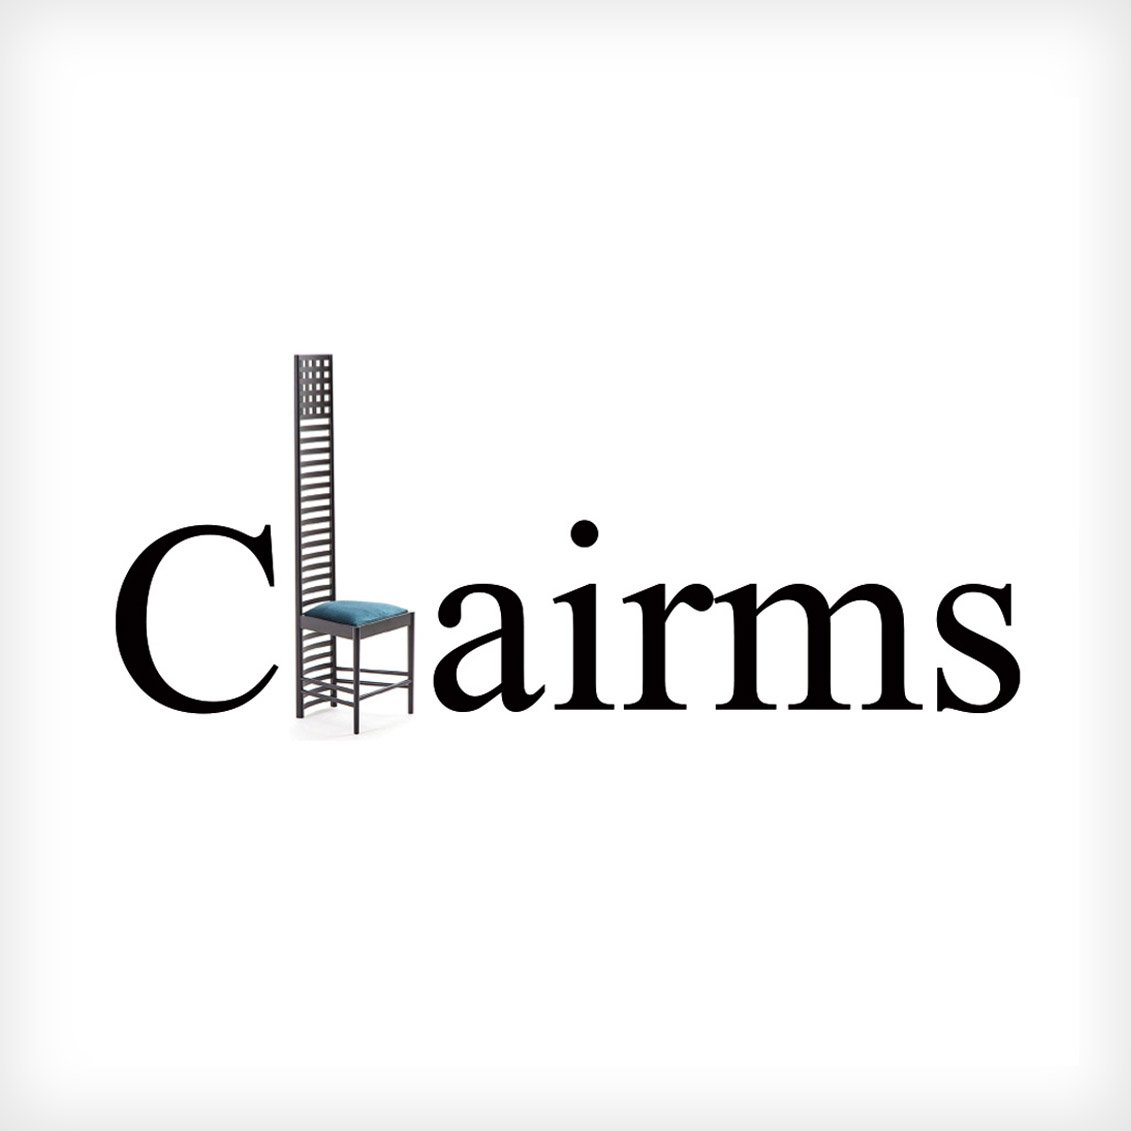 "Chairms" Logo